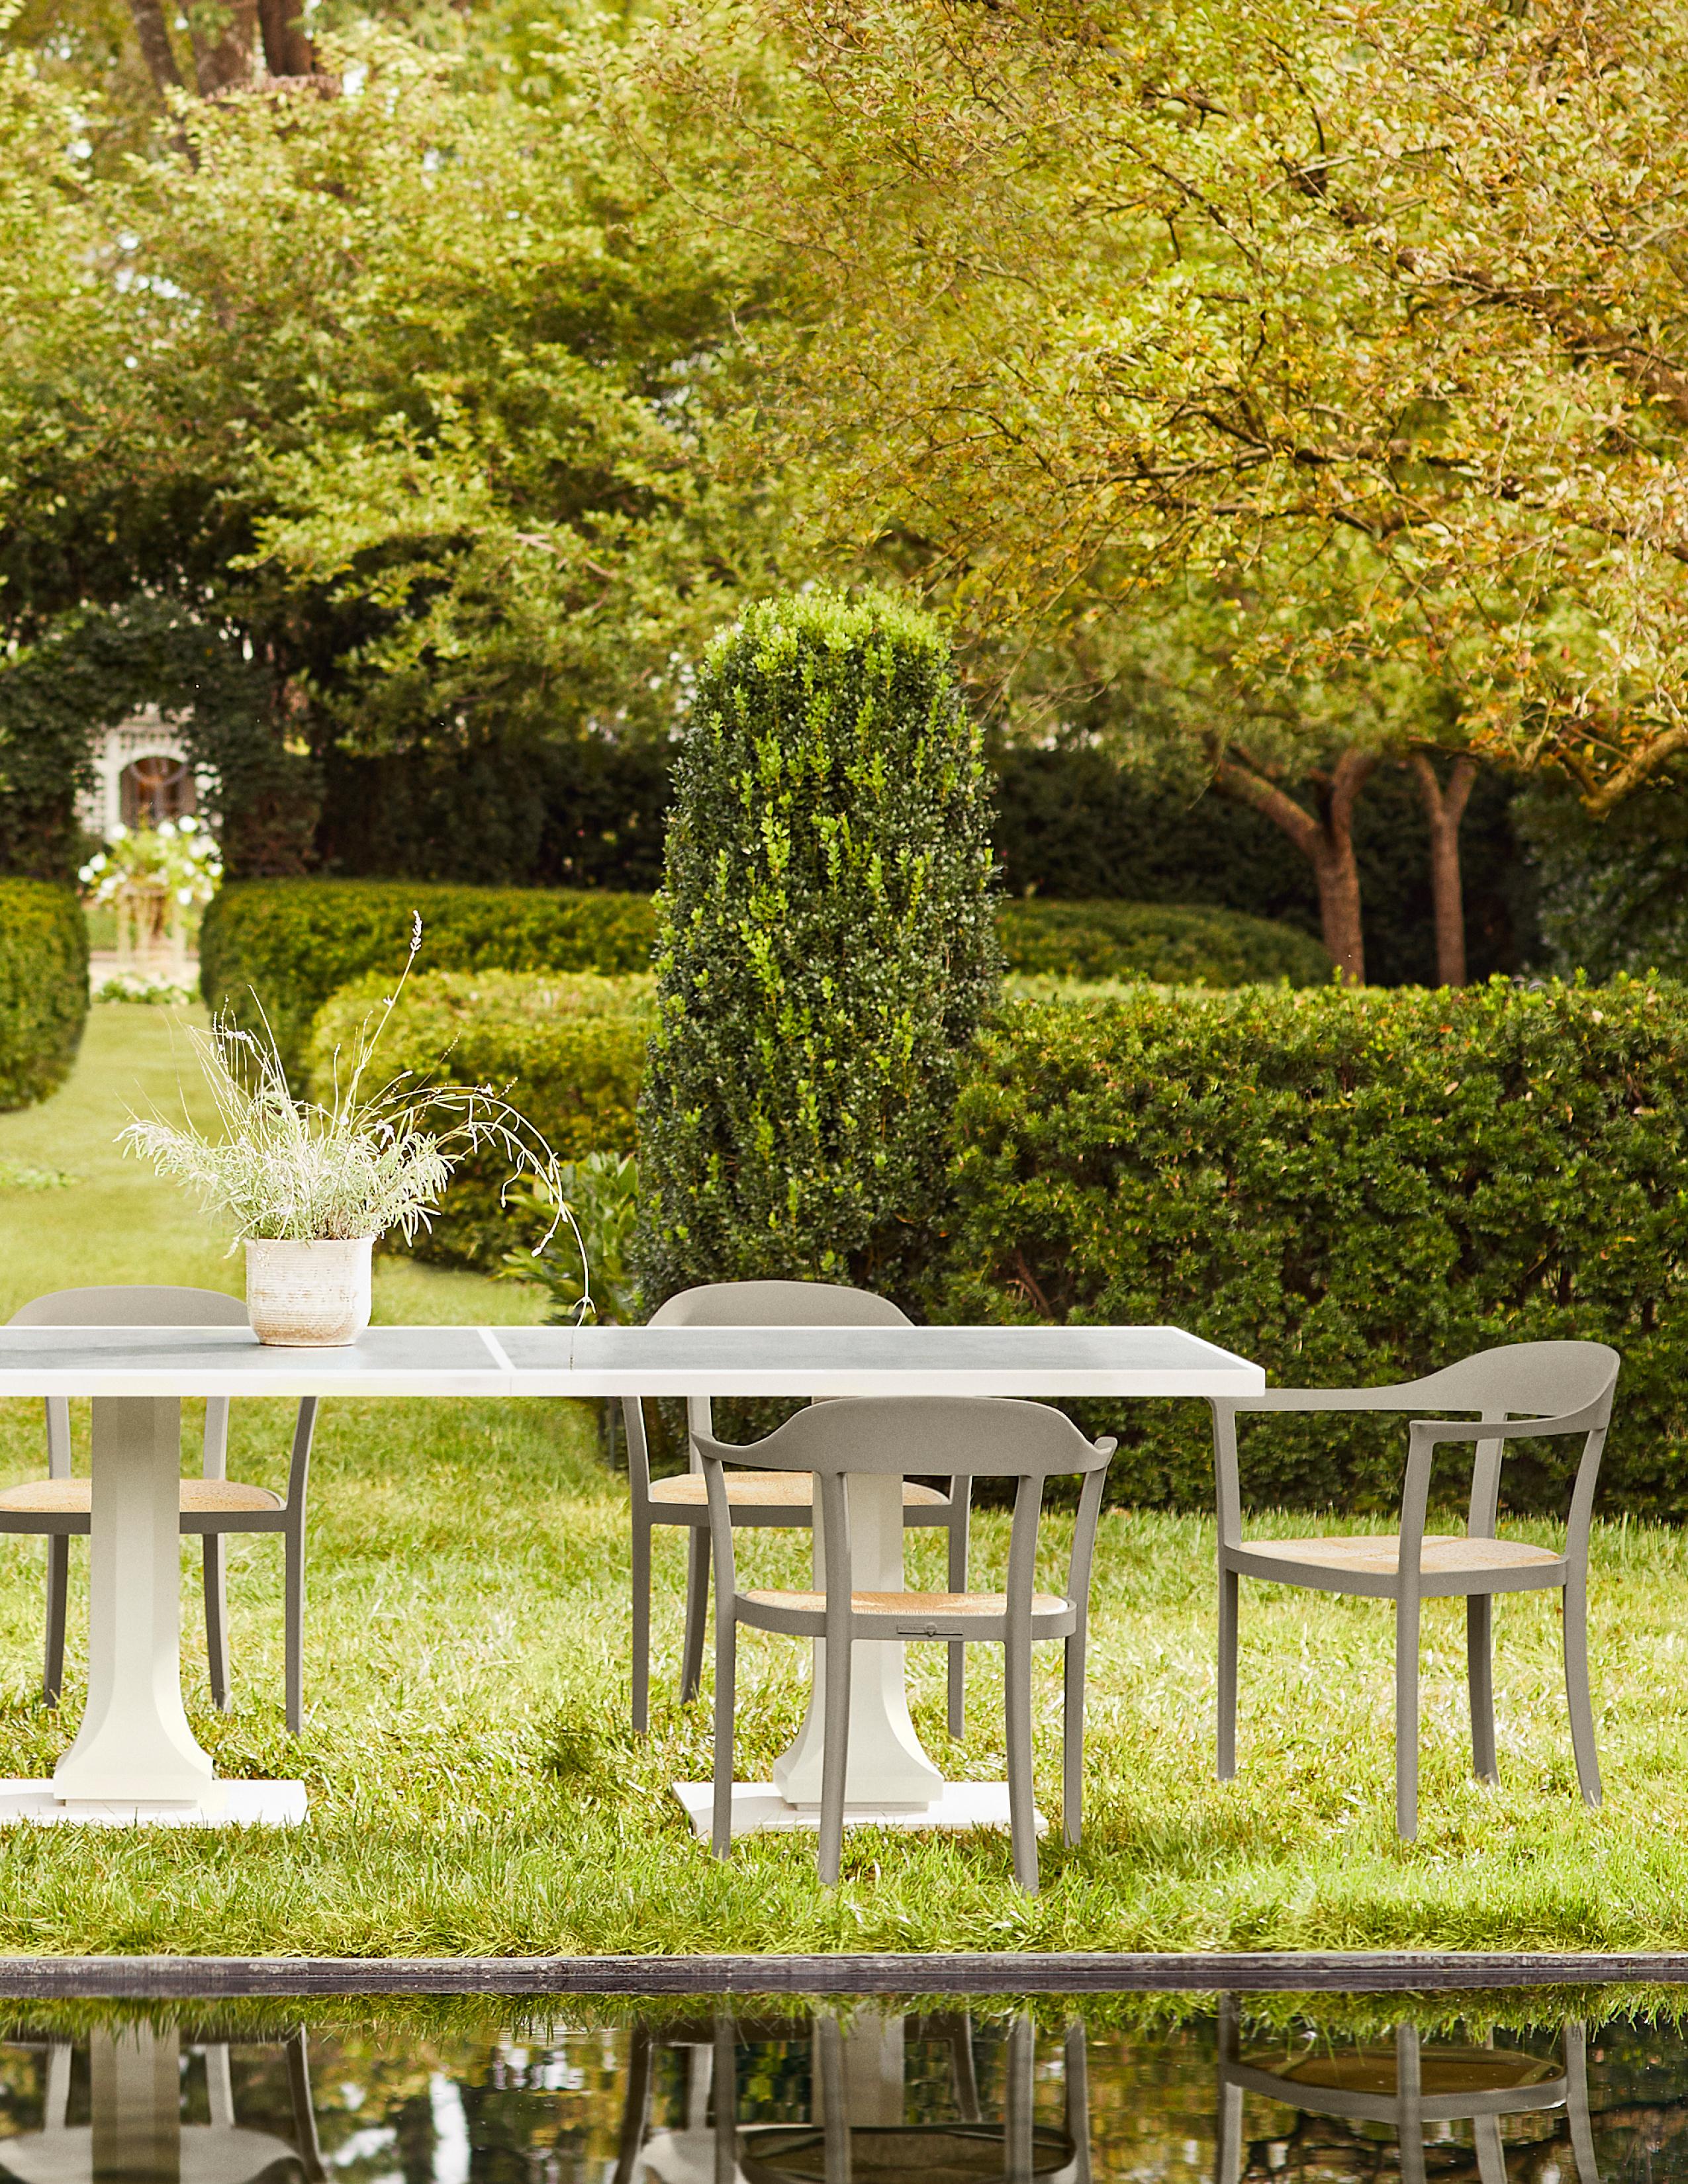 Chesapeake Dining Chair, Classic White, Woven Rush, Outdoor Garden Furniture 8